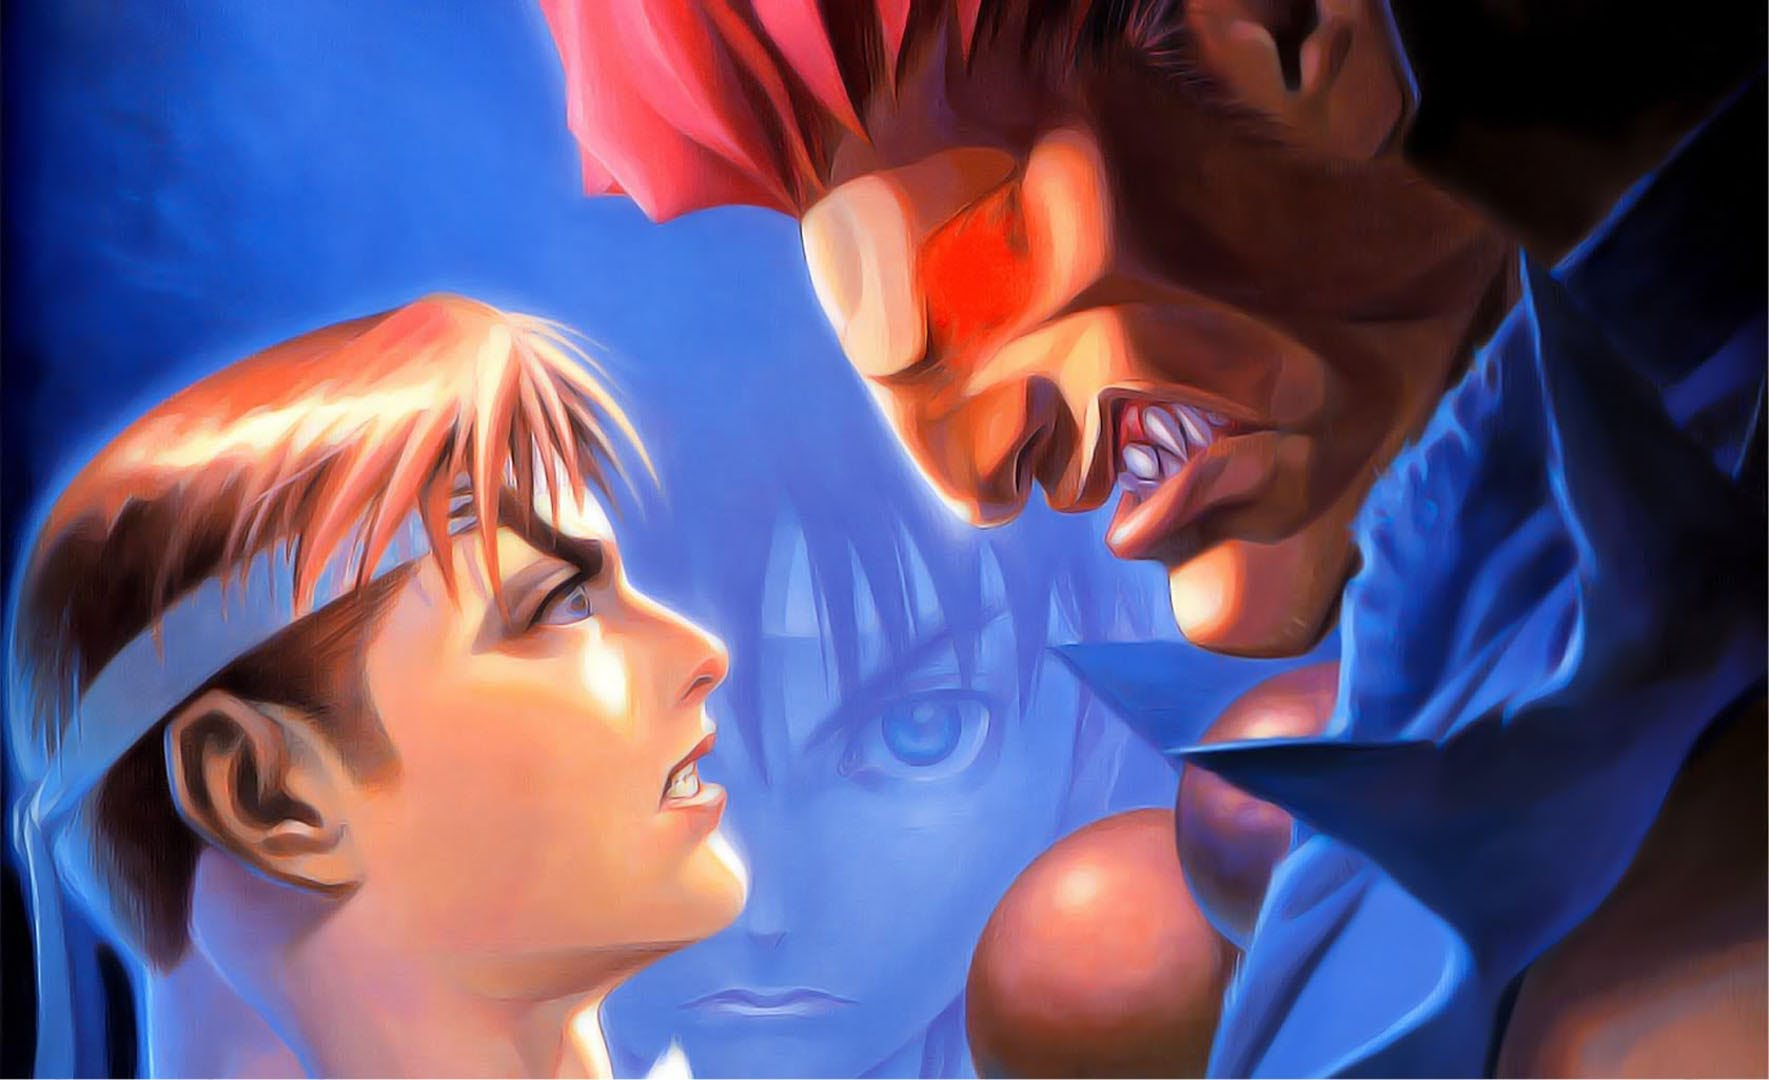 Street Fighter Alpha 2 ryu Vs. Sagat 3D Shadow Box for 